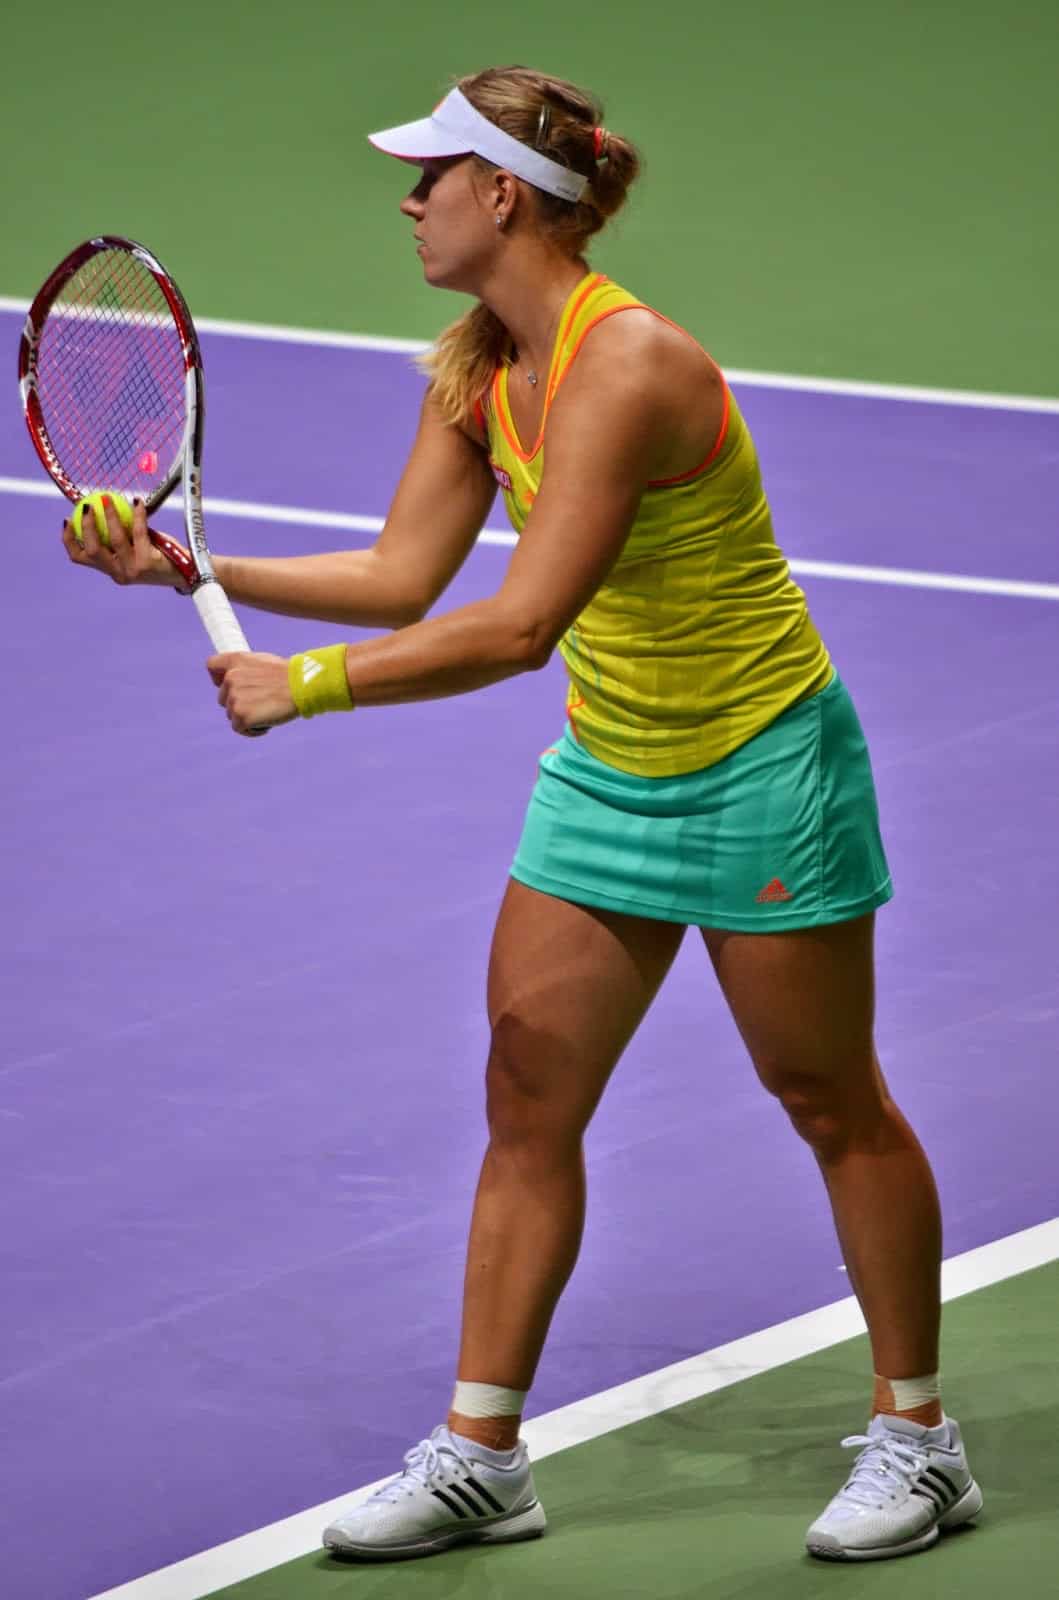 Angelique Kerber in the 2012 WTA Championships at the Sinan Erdem Spor Salonu in Bakırköy, Istanbul, Turkey